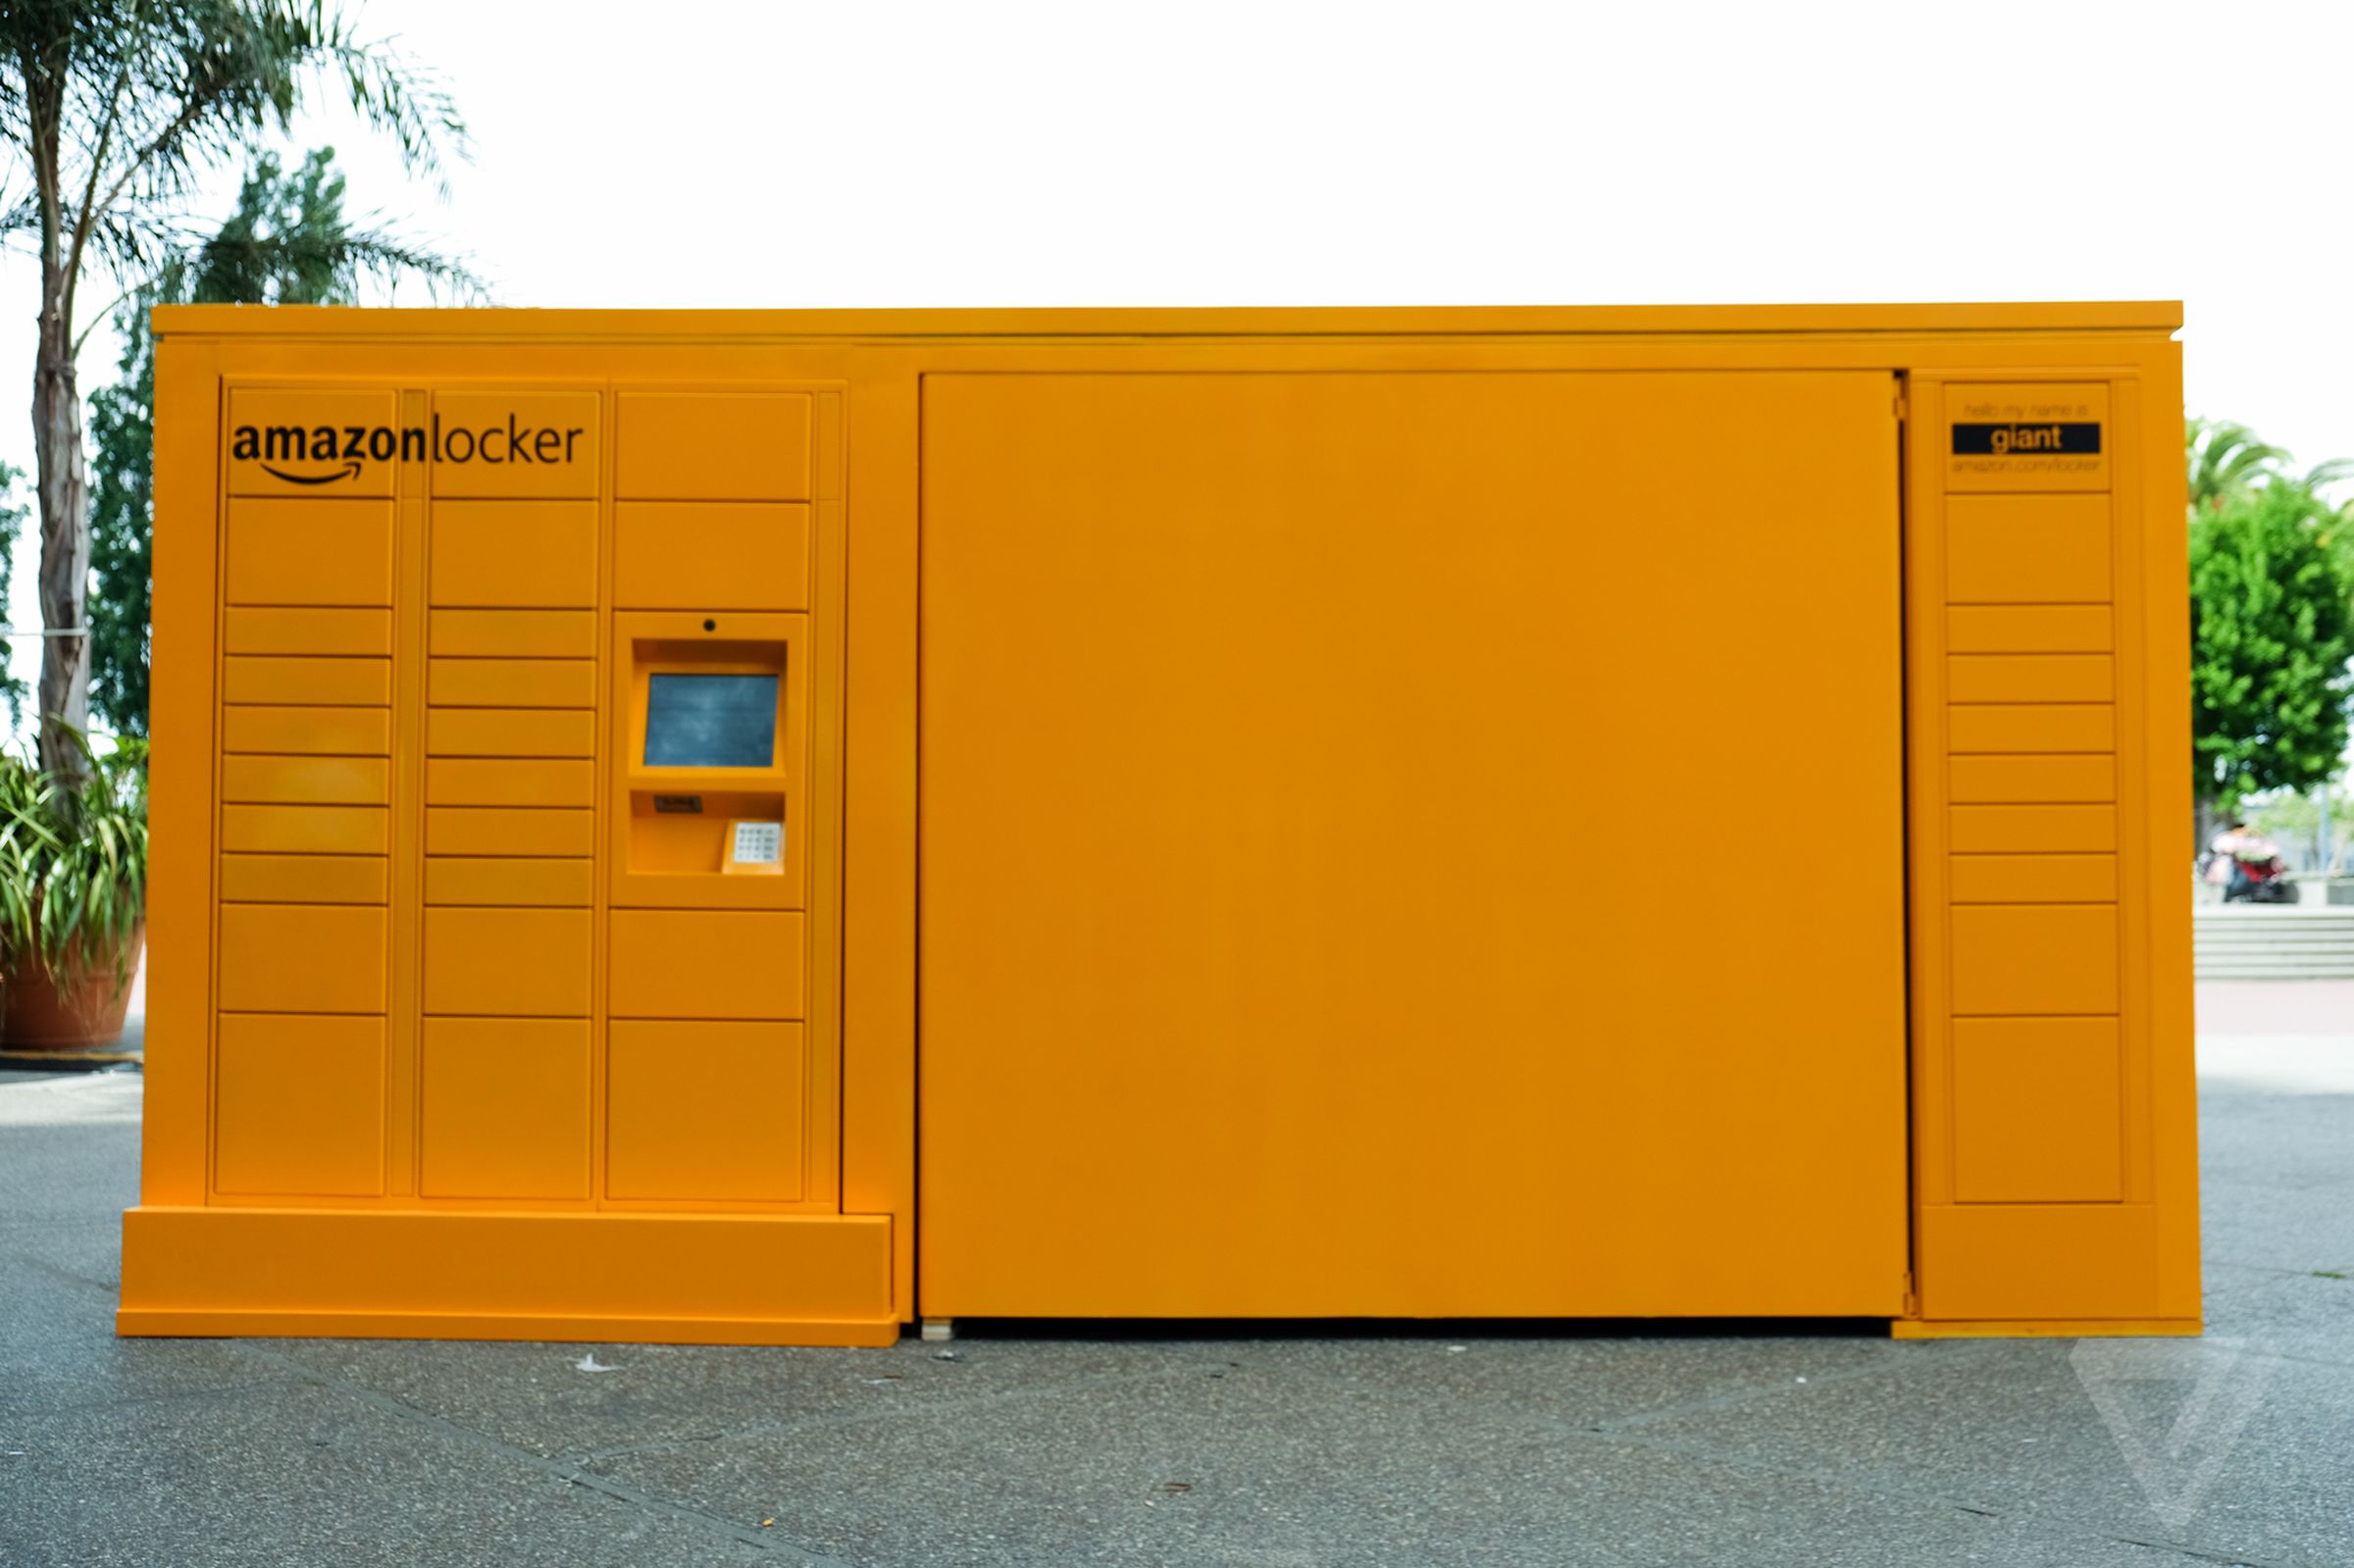 Amazon's 'Giant' locker in San Francisco